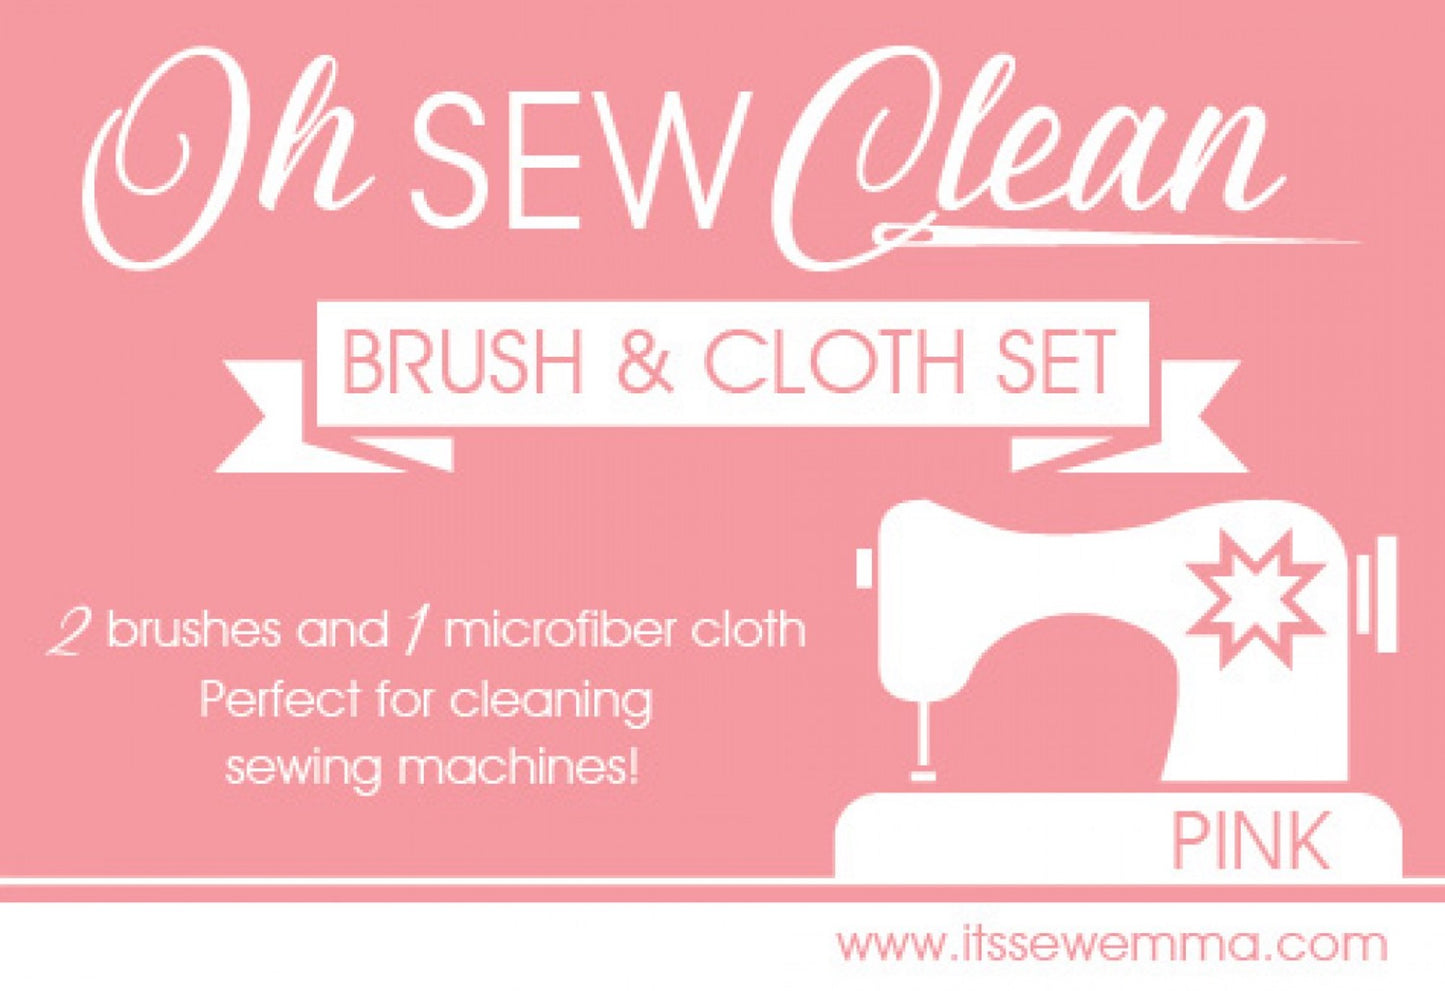 Oh Sew Clean Brush & Cloth Set- Pink